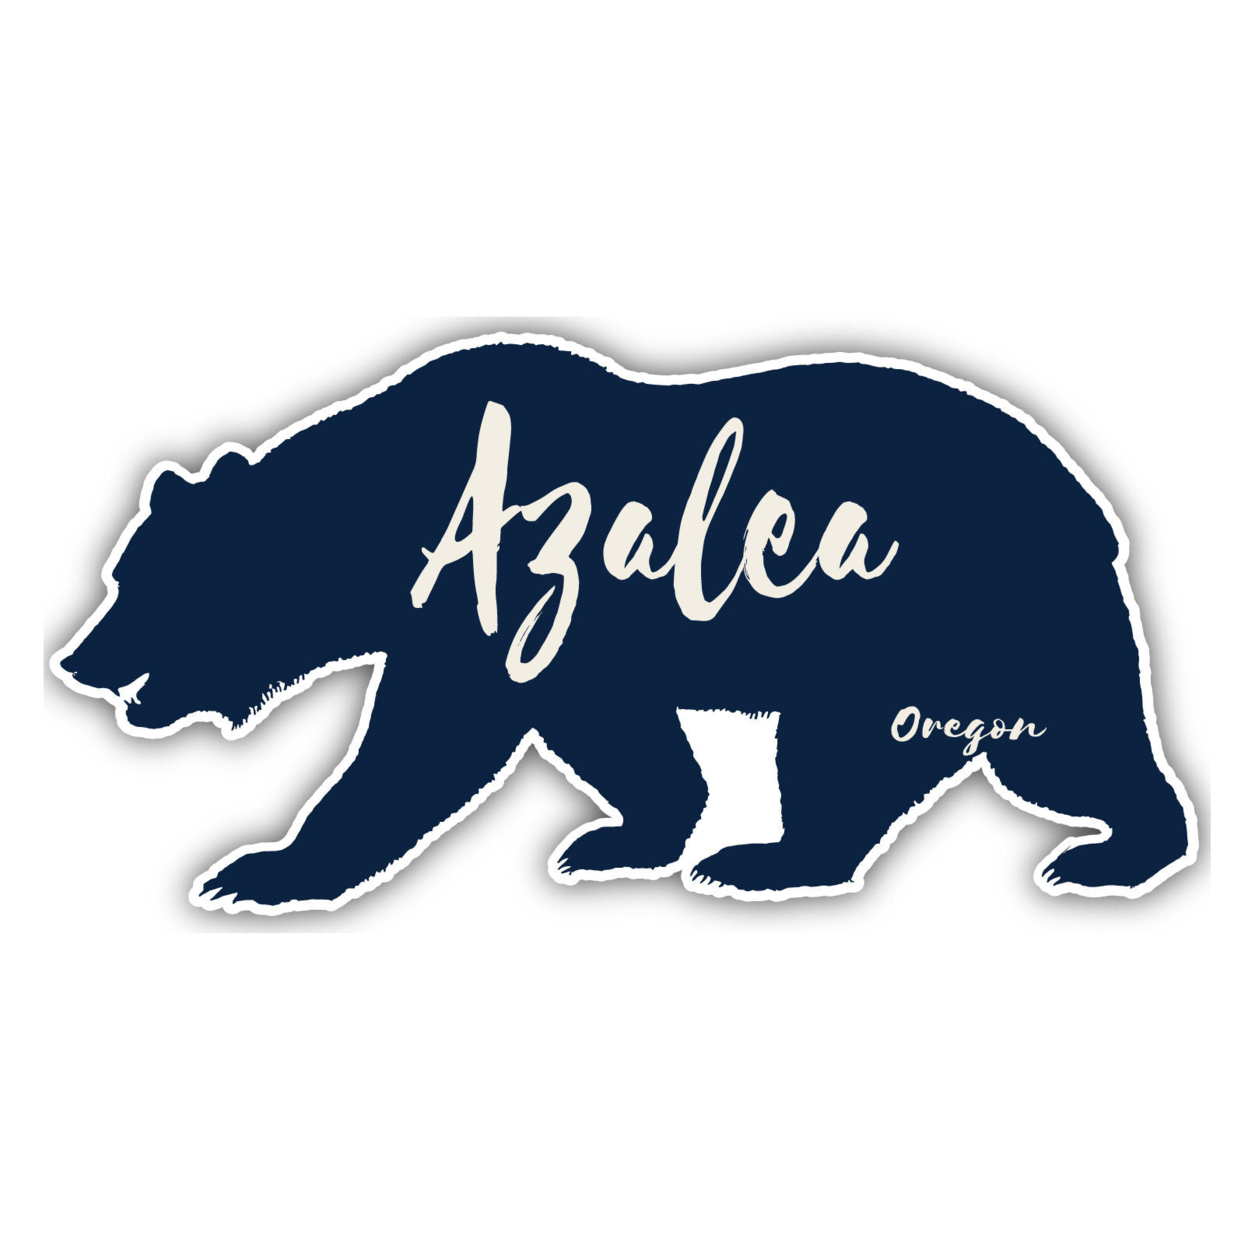 Azalea Oregon Souvenir Decorative Stickers (Choose Theme And Size) - Single Unit, 4-Inch, Bear